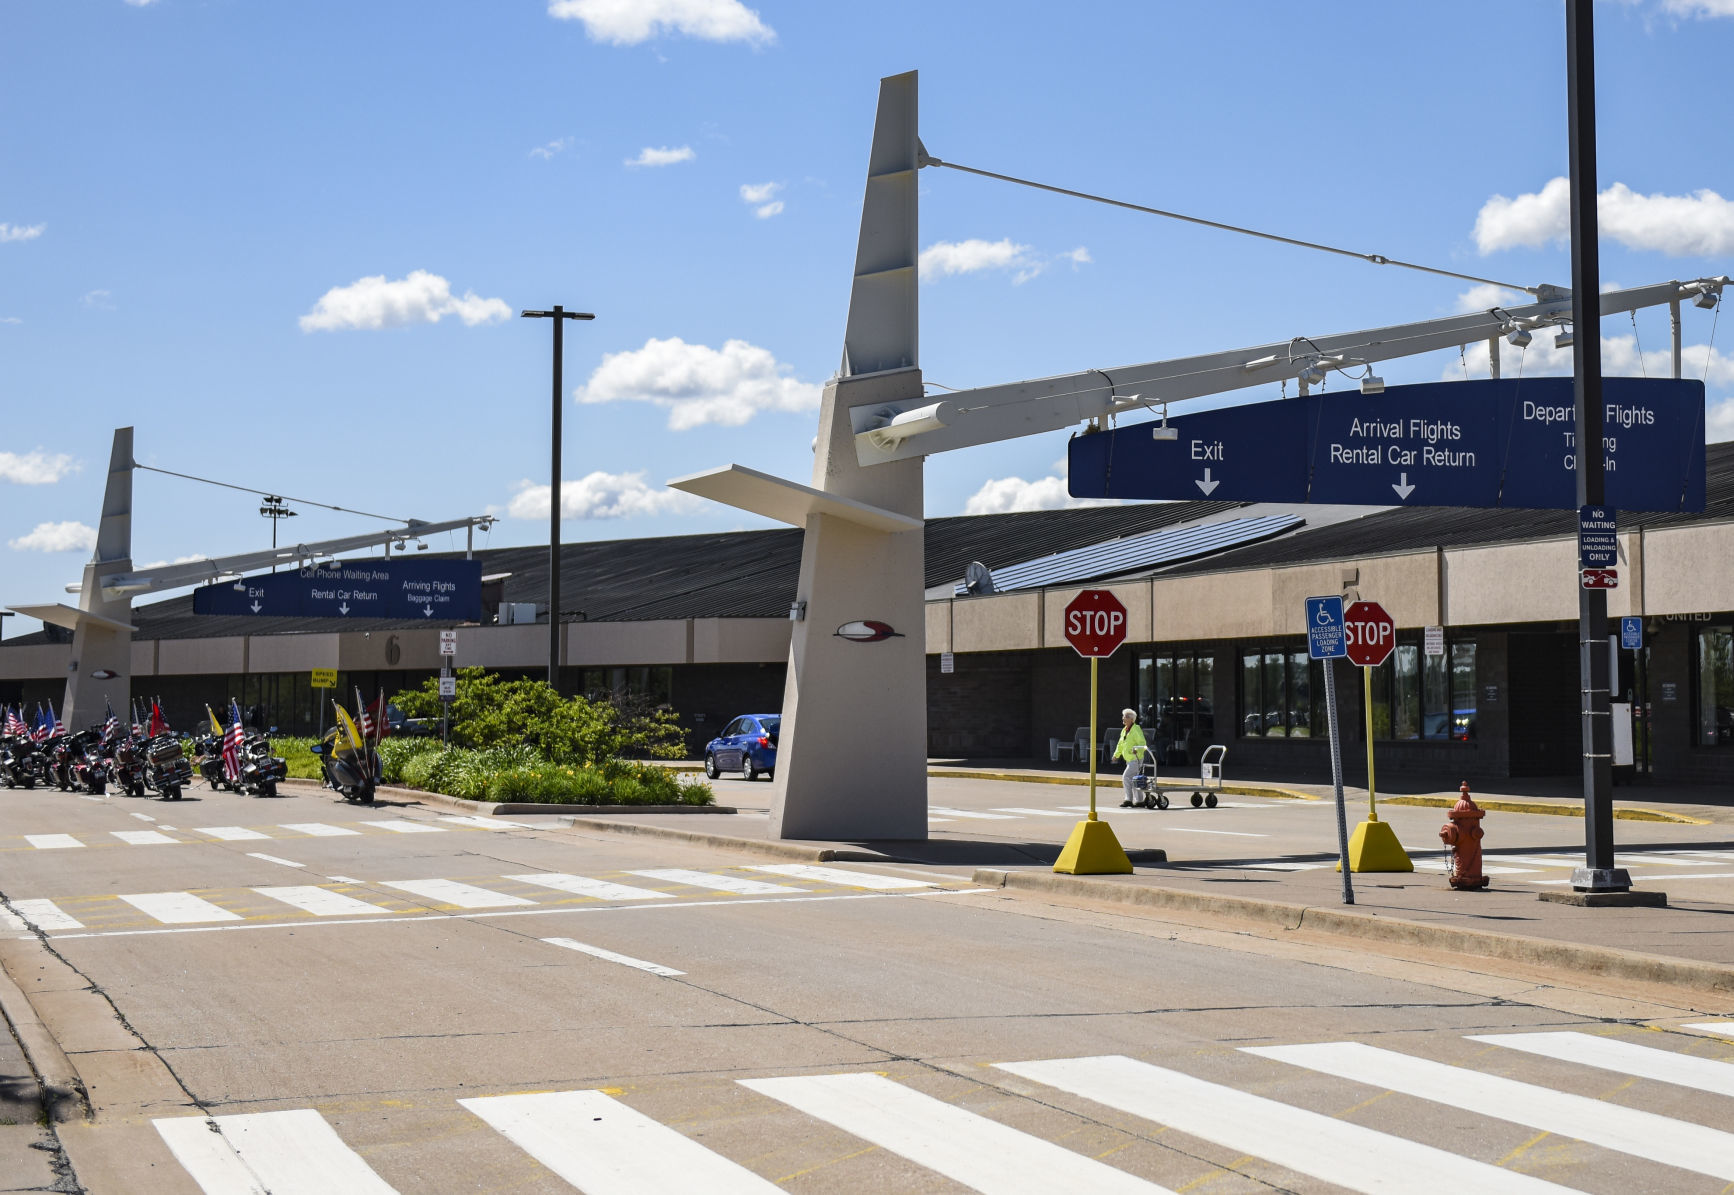 quad cities airport public safety department hiring